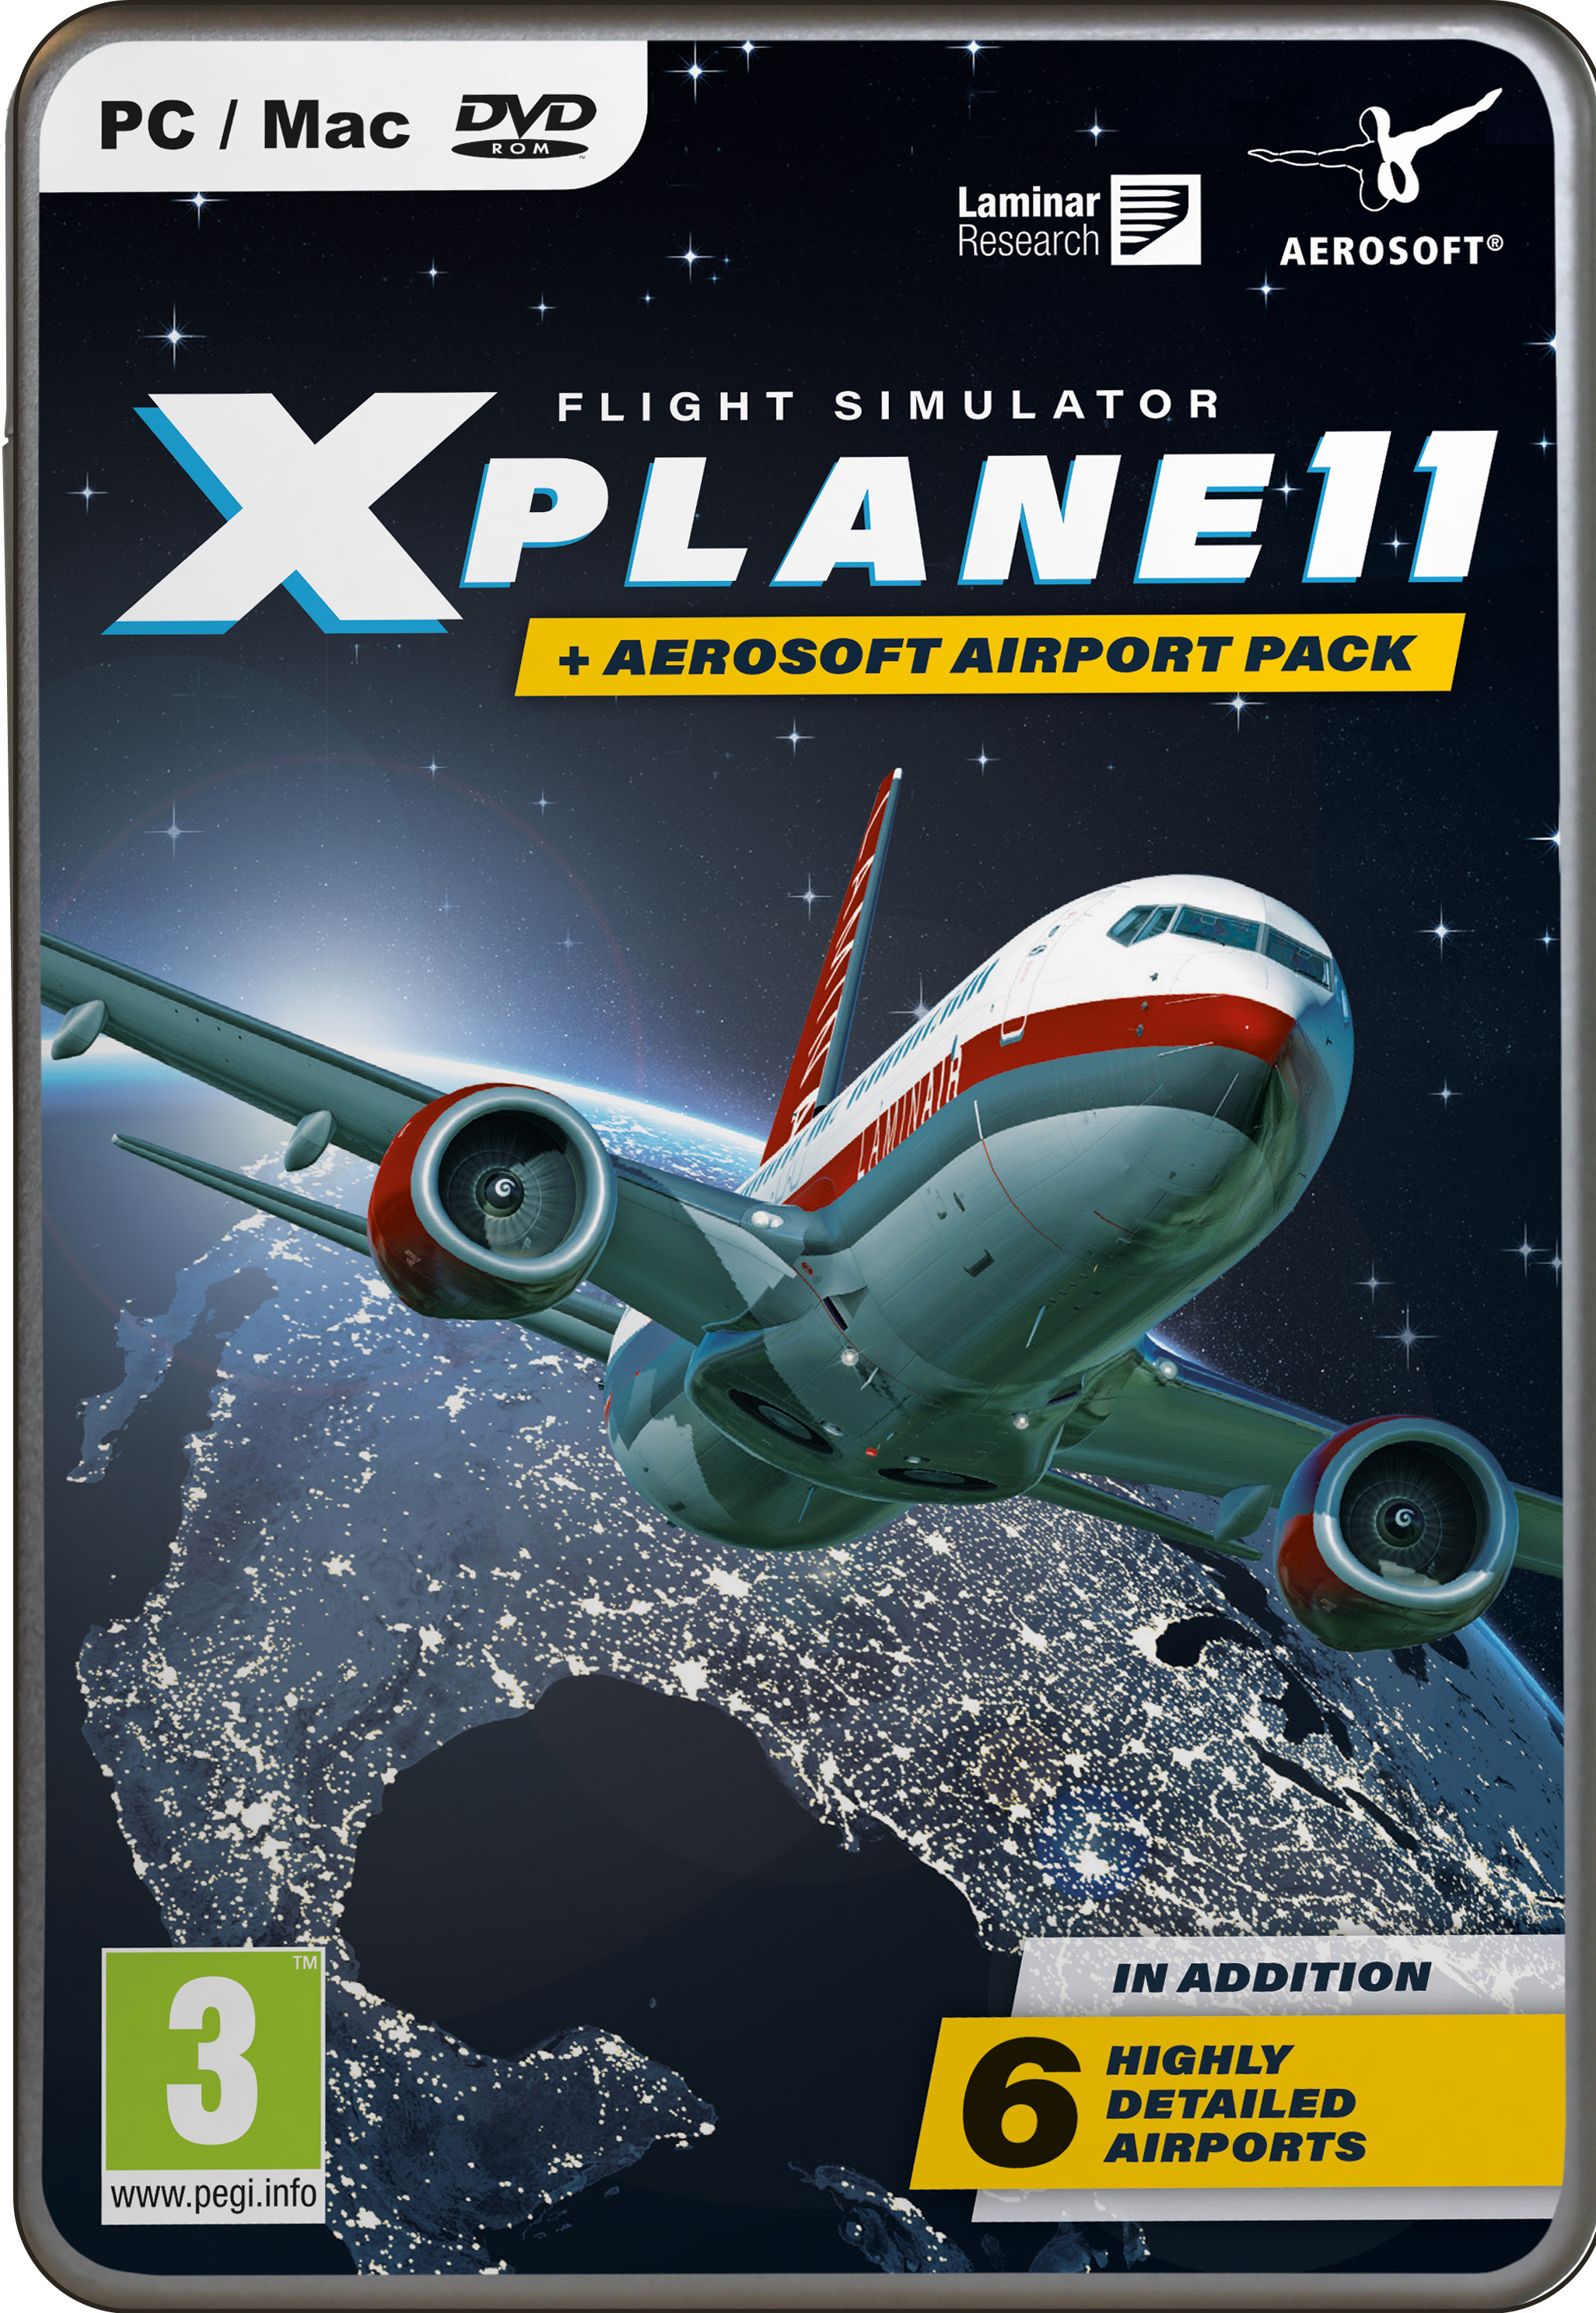 x plane 11 video basic video card